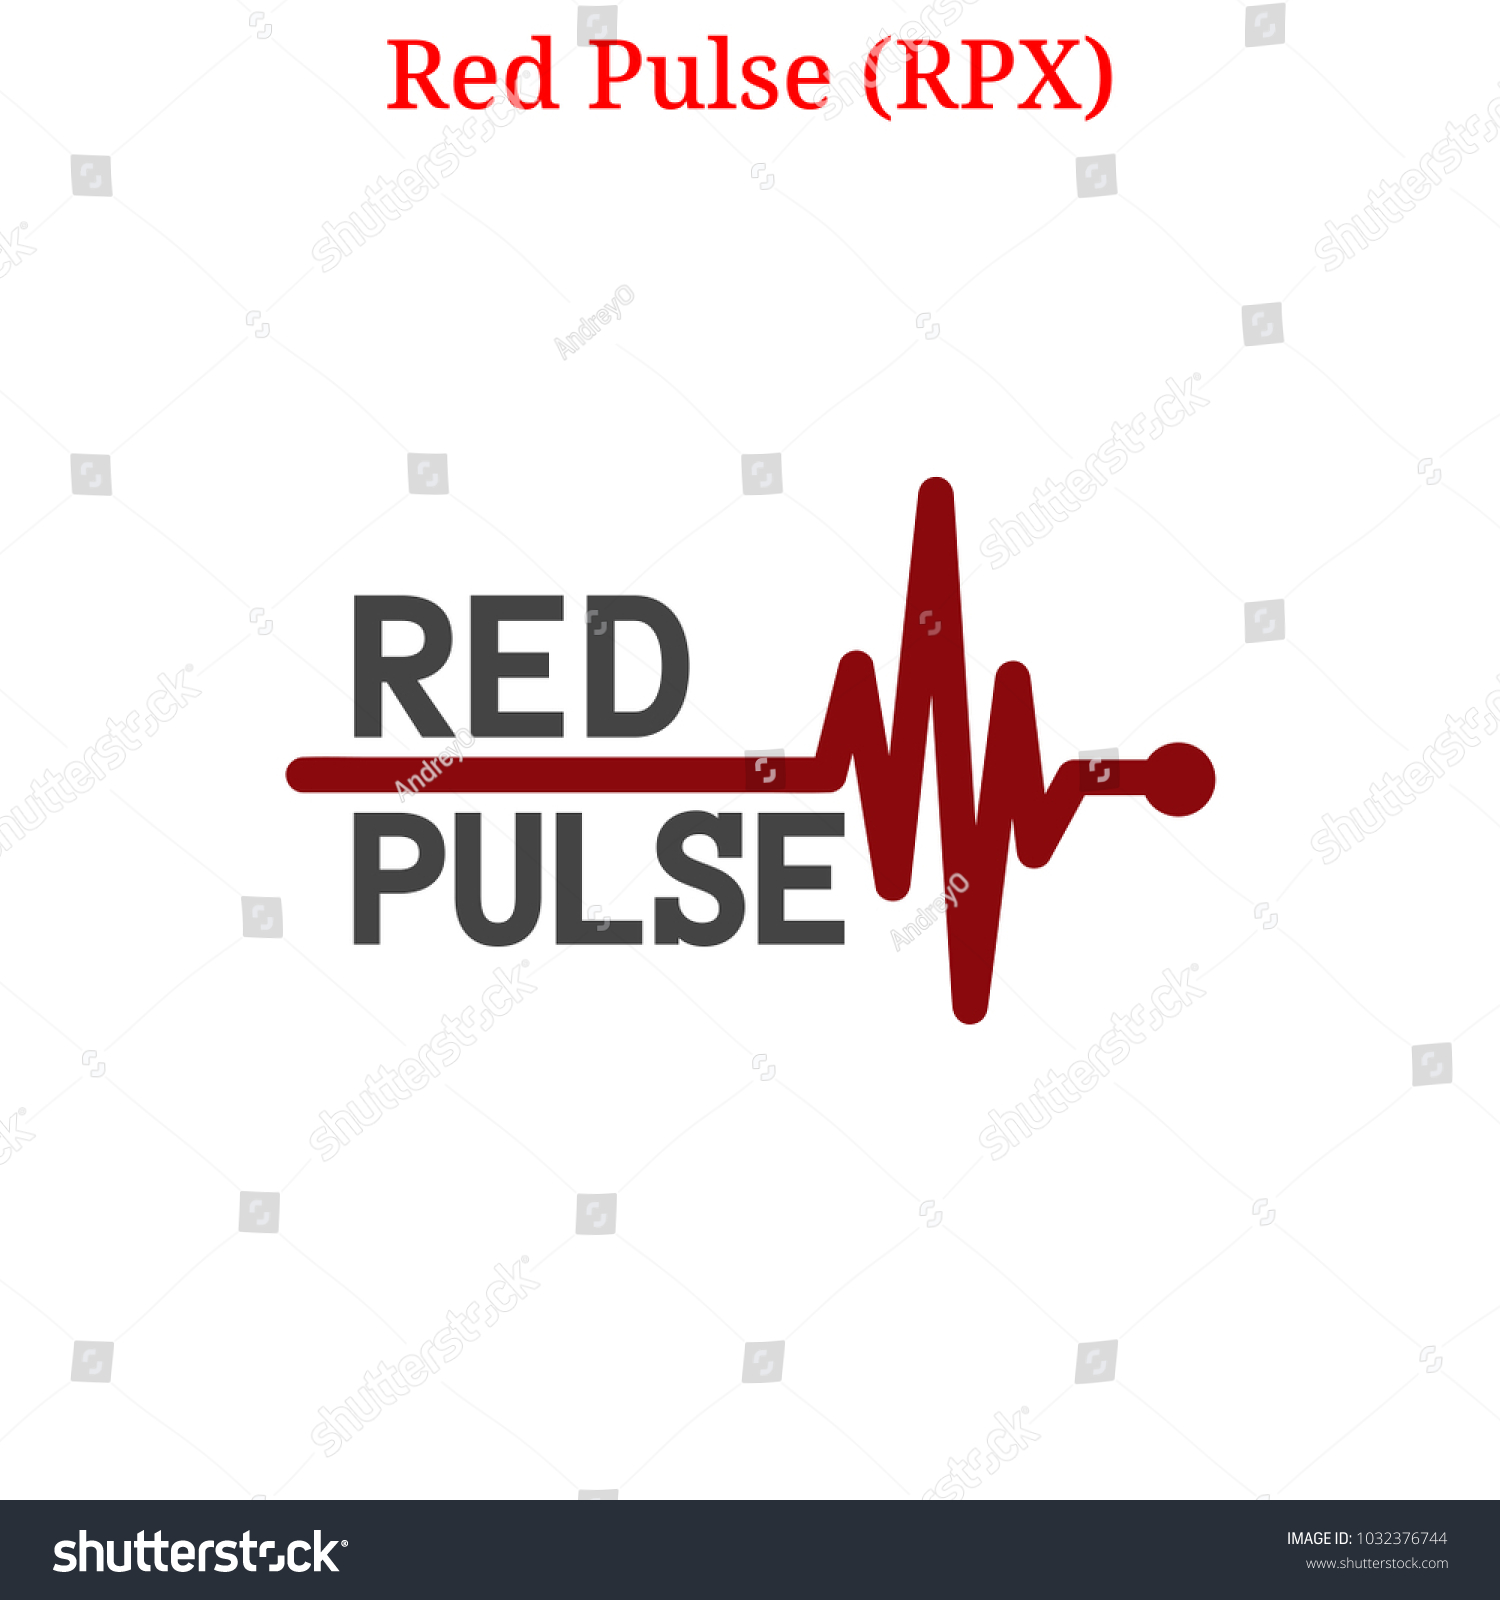 crypto red pulse ico